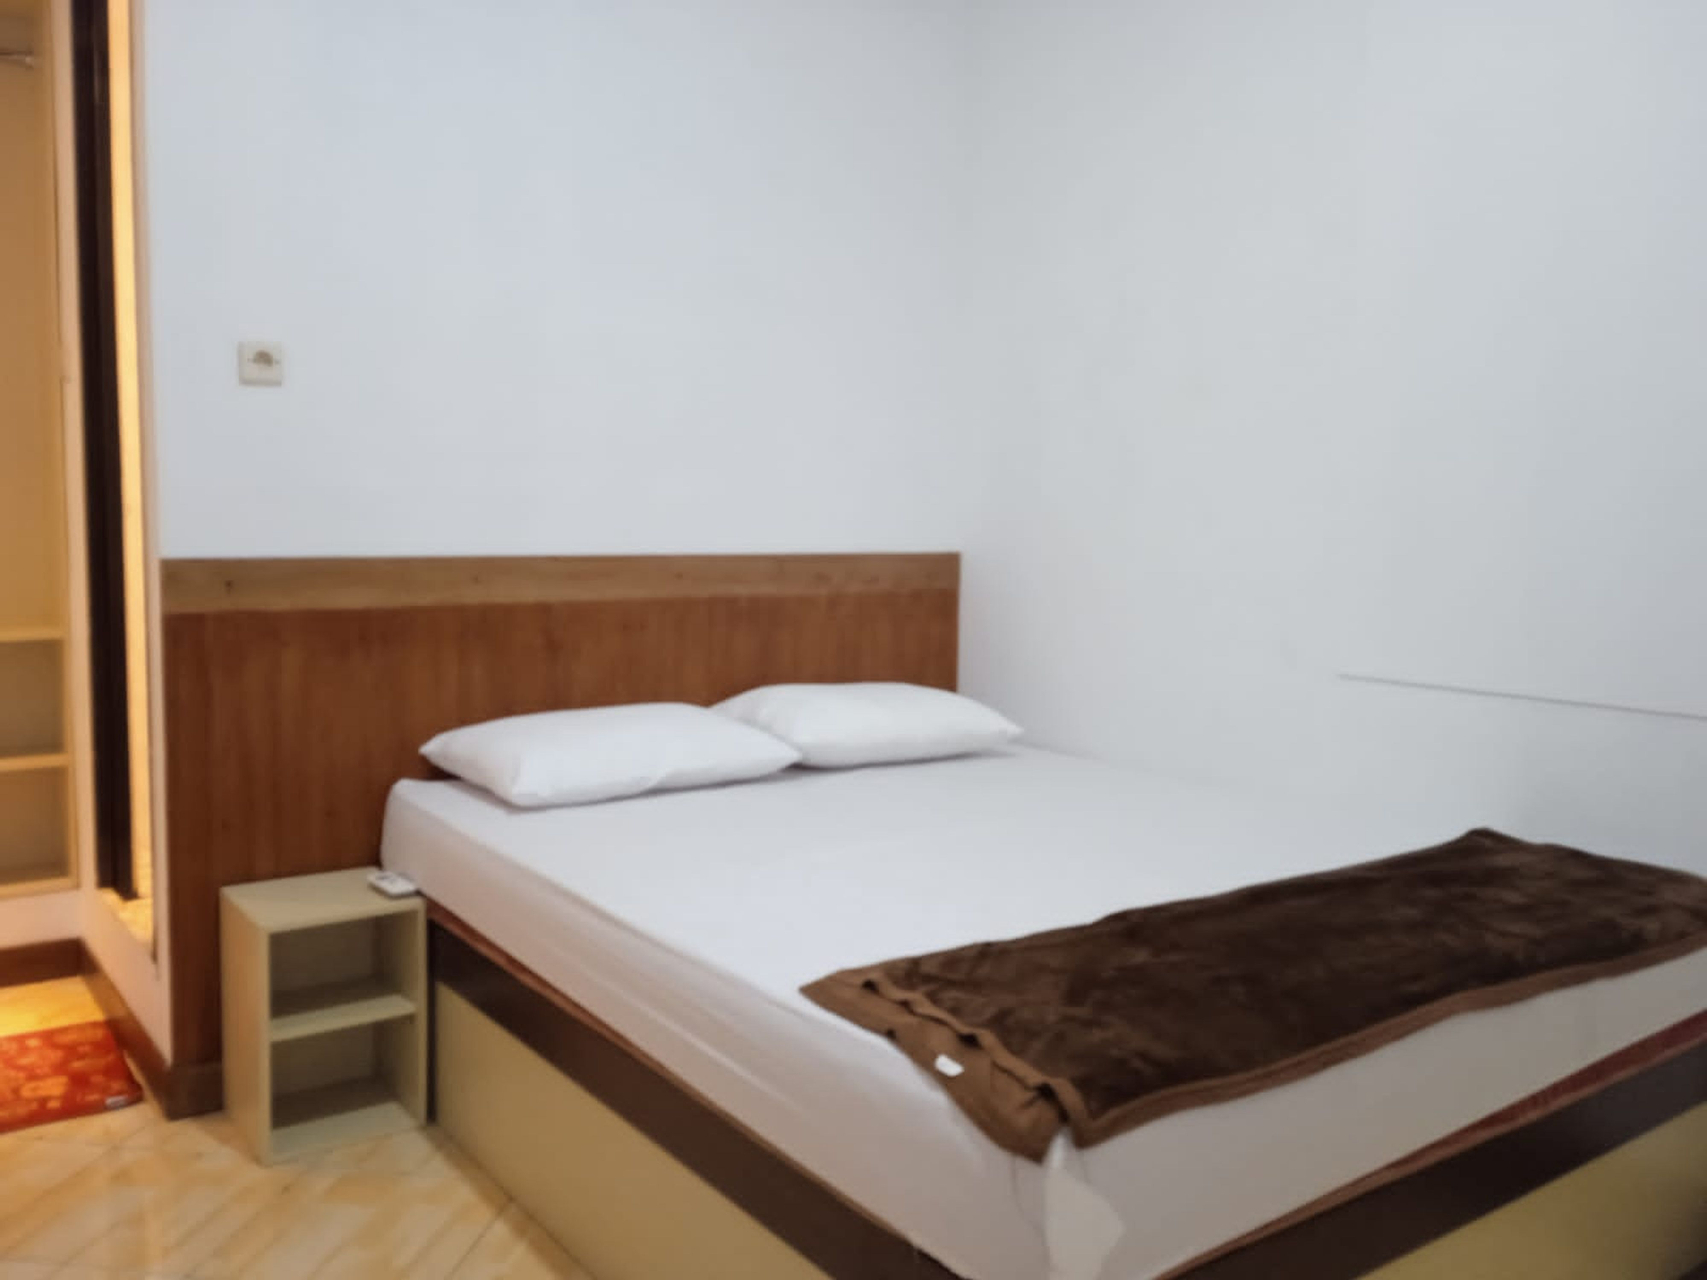 Bedroom 1, Gorland Hostel near GOR Satria Purwokerto RedPartner, Banyumas